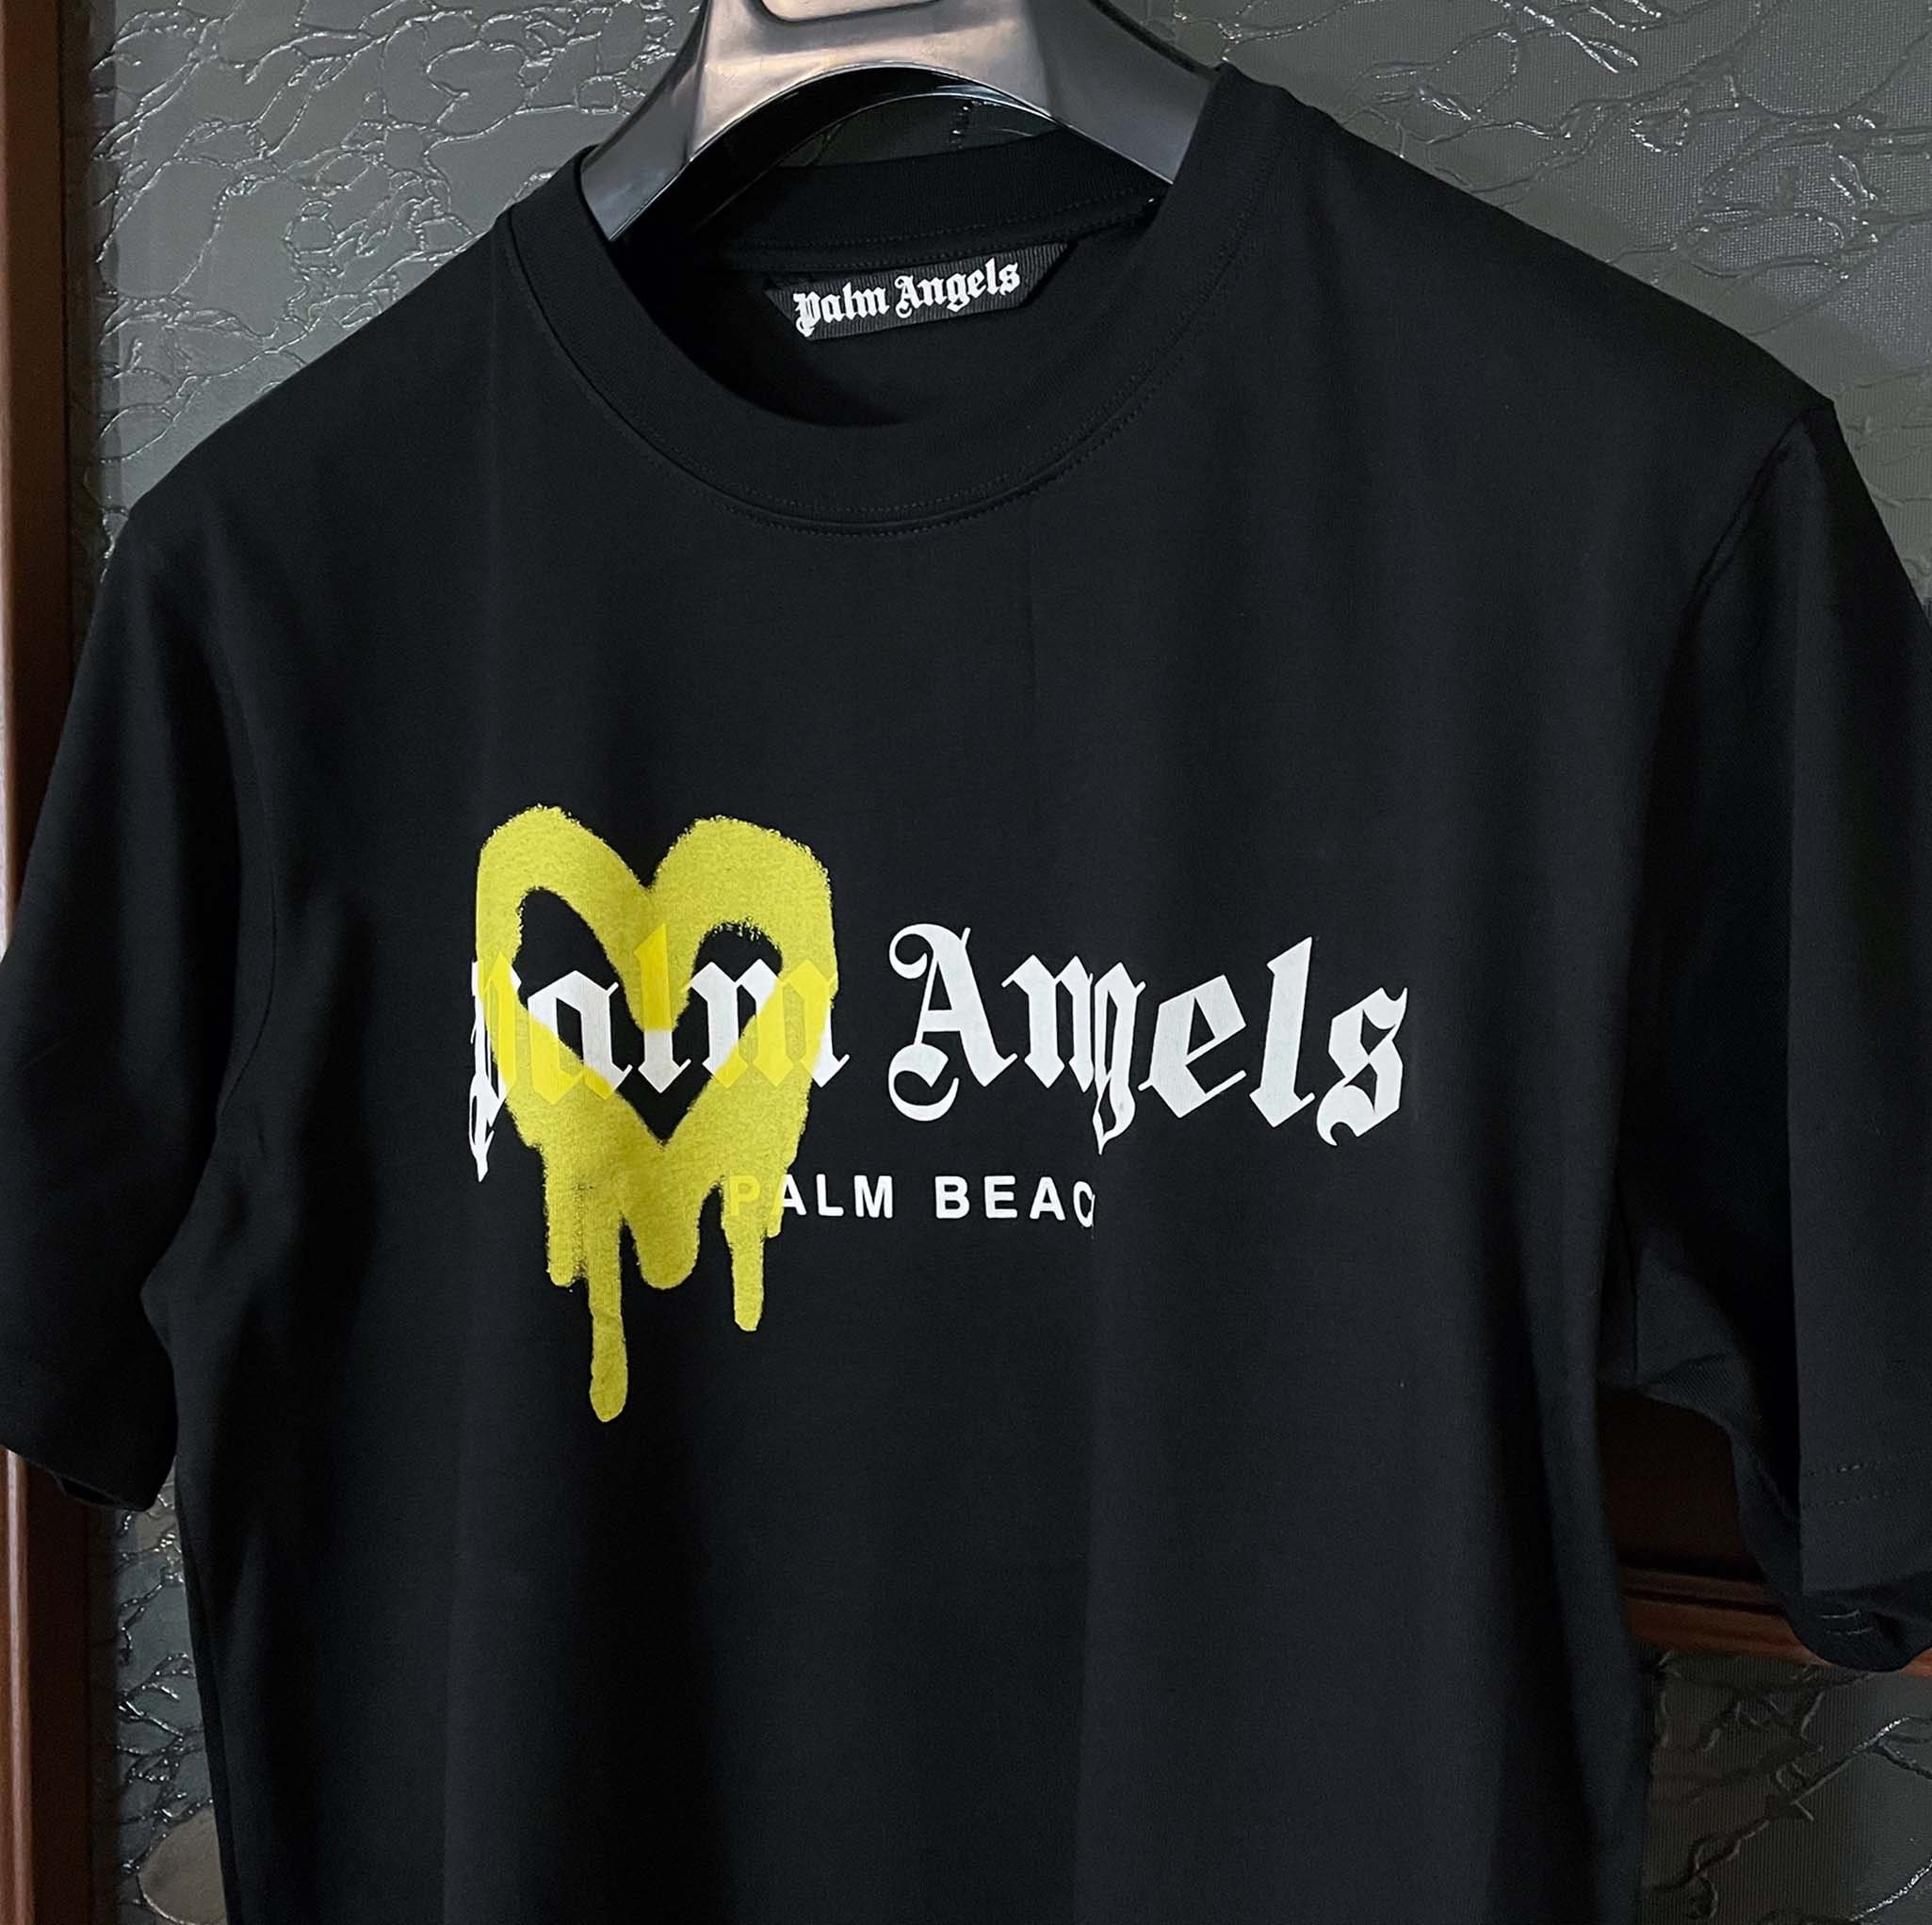 Monogram Spray City T-Shirt Paris in black - Palm Angels® Official